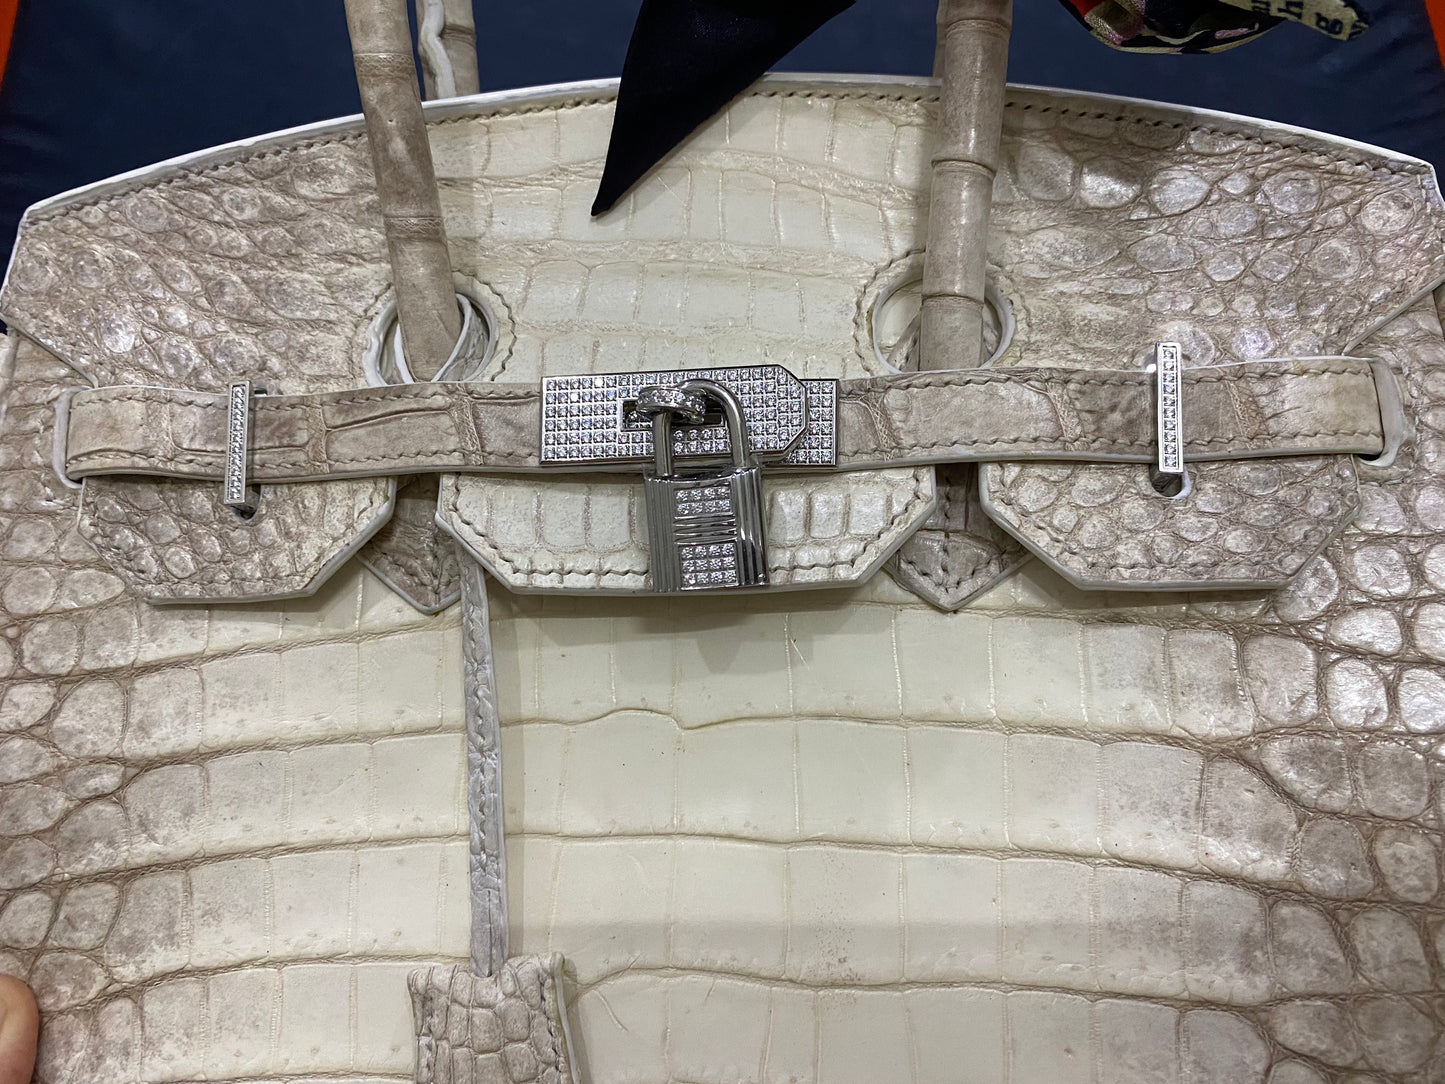 Himalayan Crocodile Leather Top Handle Bag